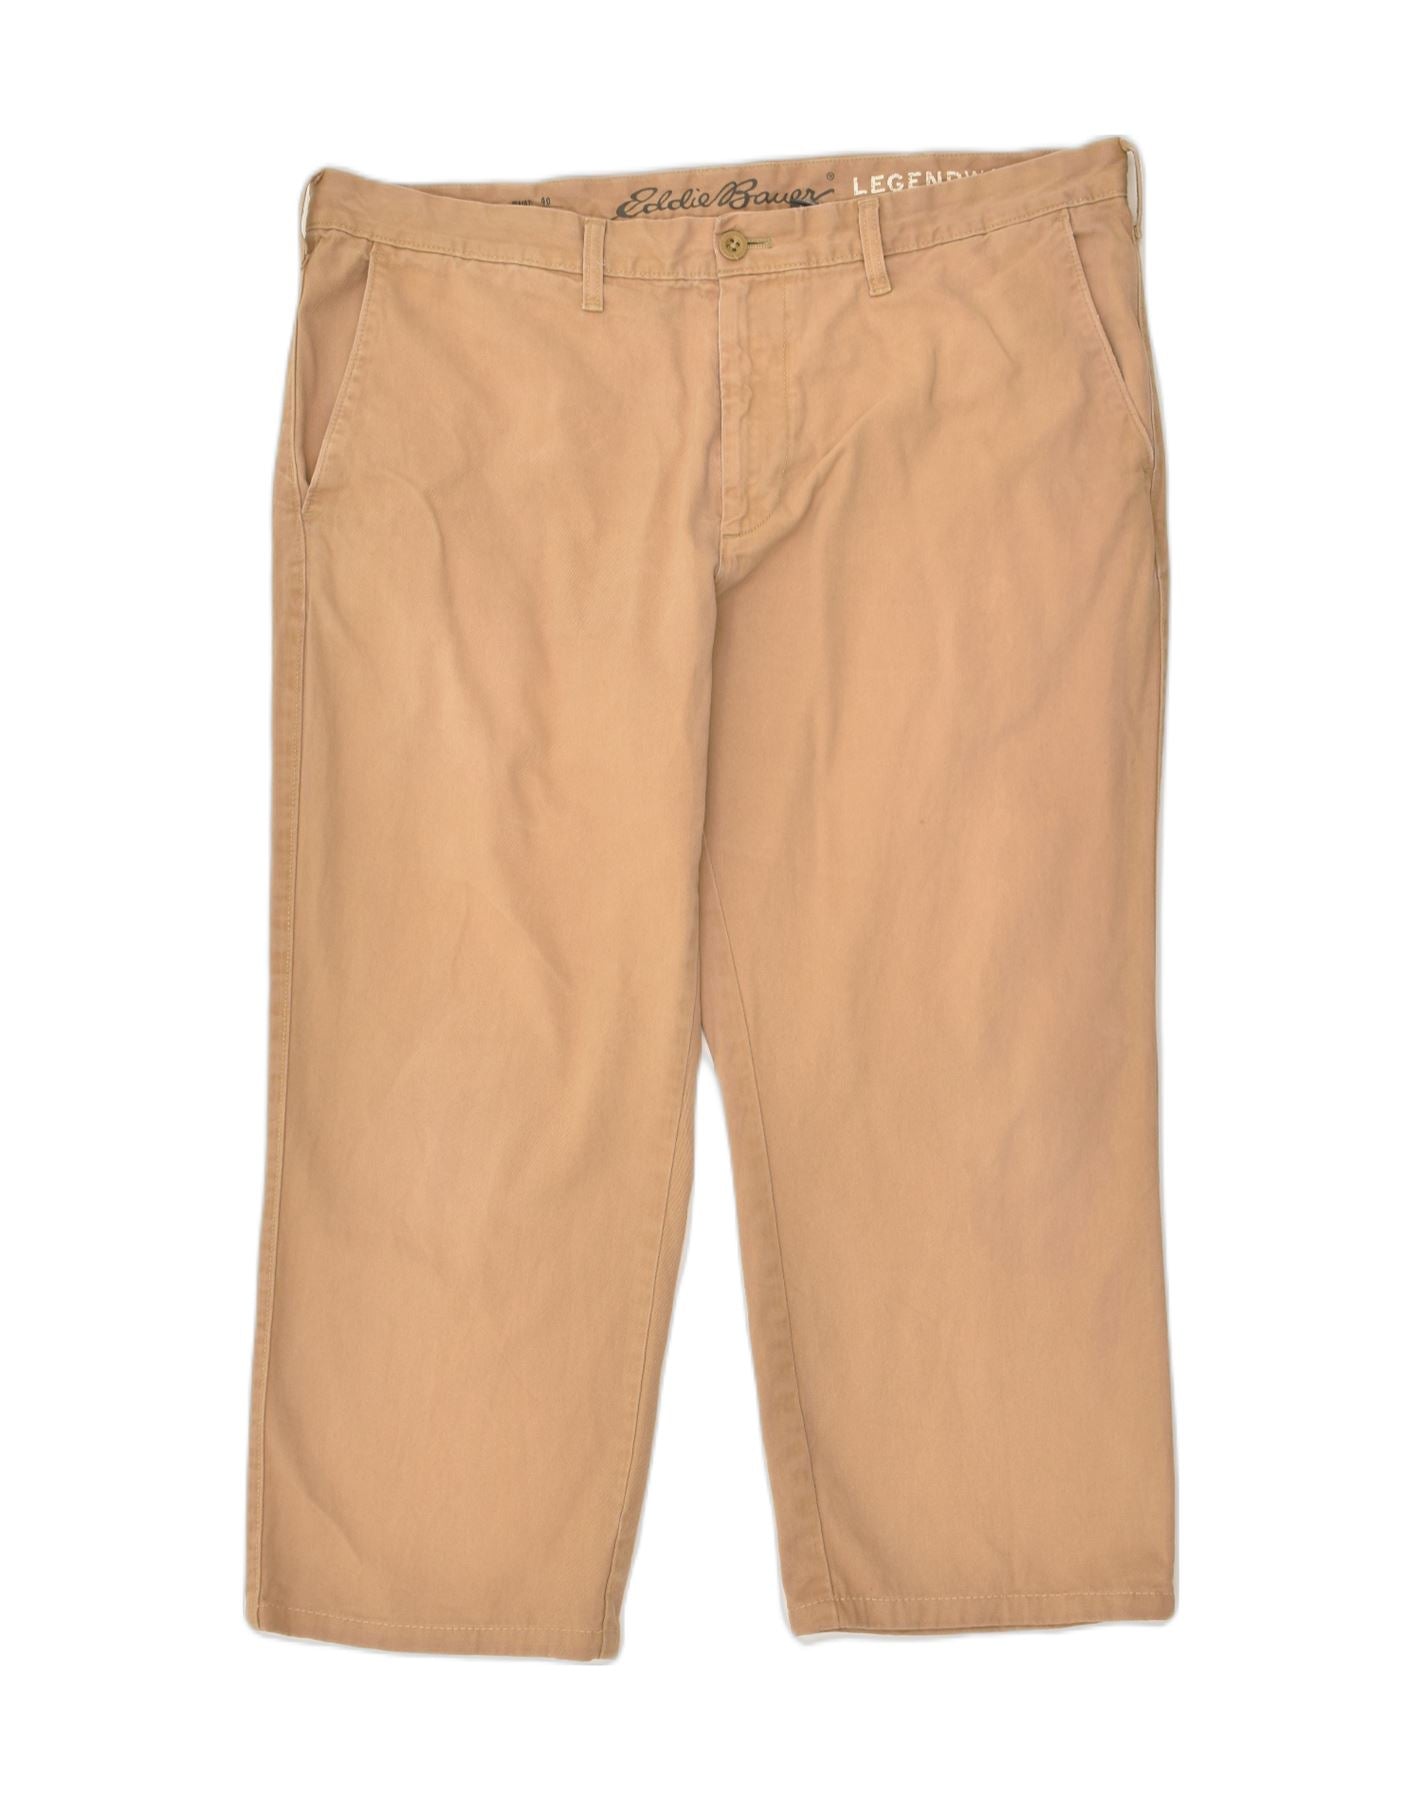 EDDIE BAUER Mens Capri Chino Trousers W40 L24 Brown Cotton